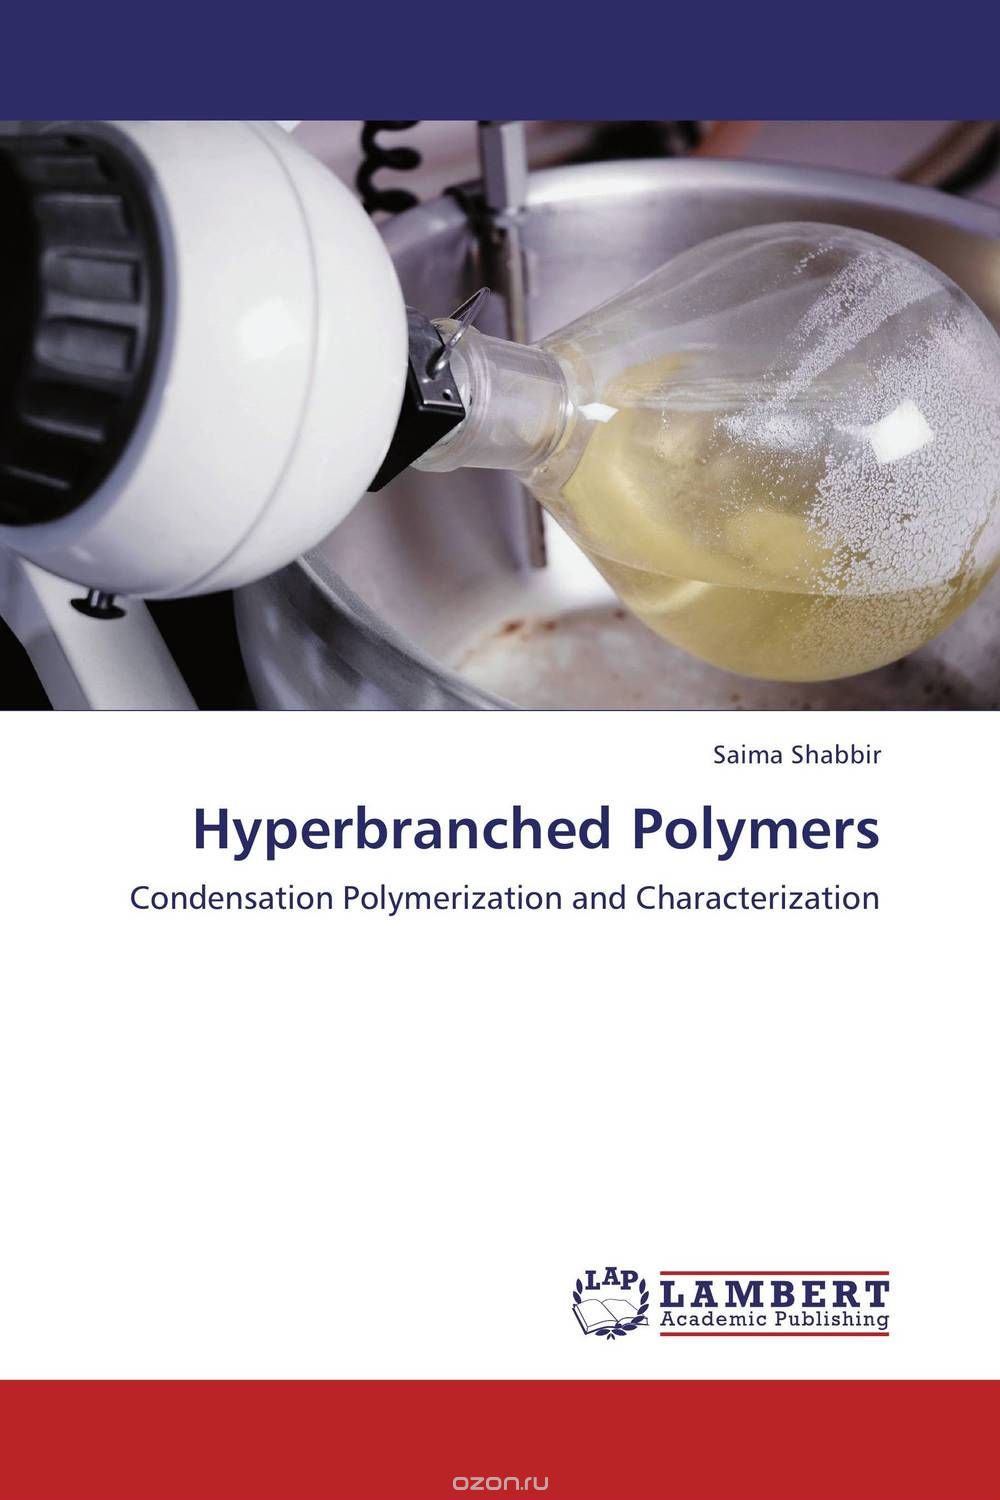 Скачать книгу "Hyperbranched Polymers"